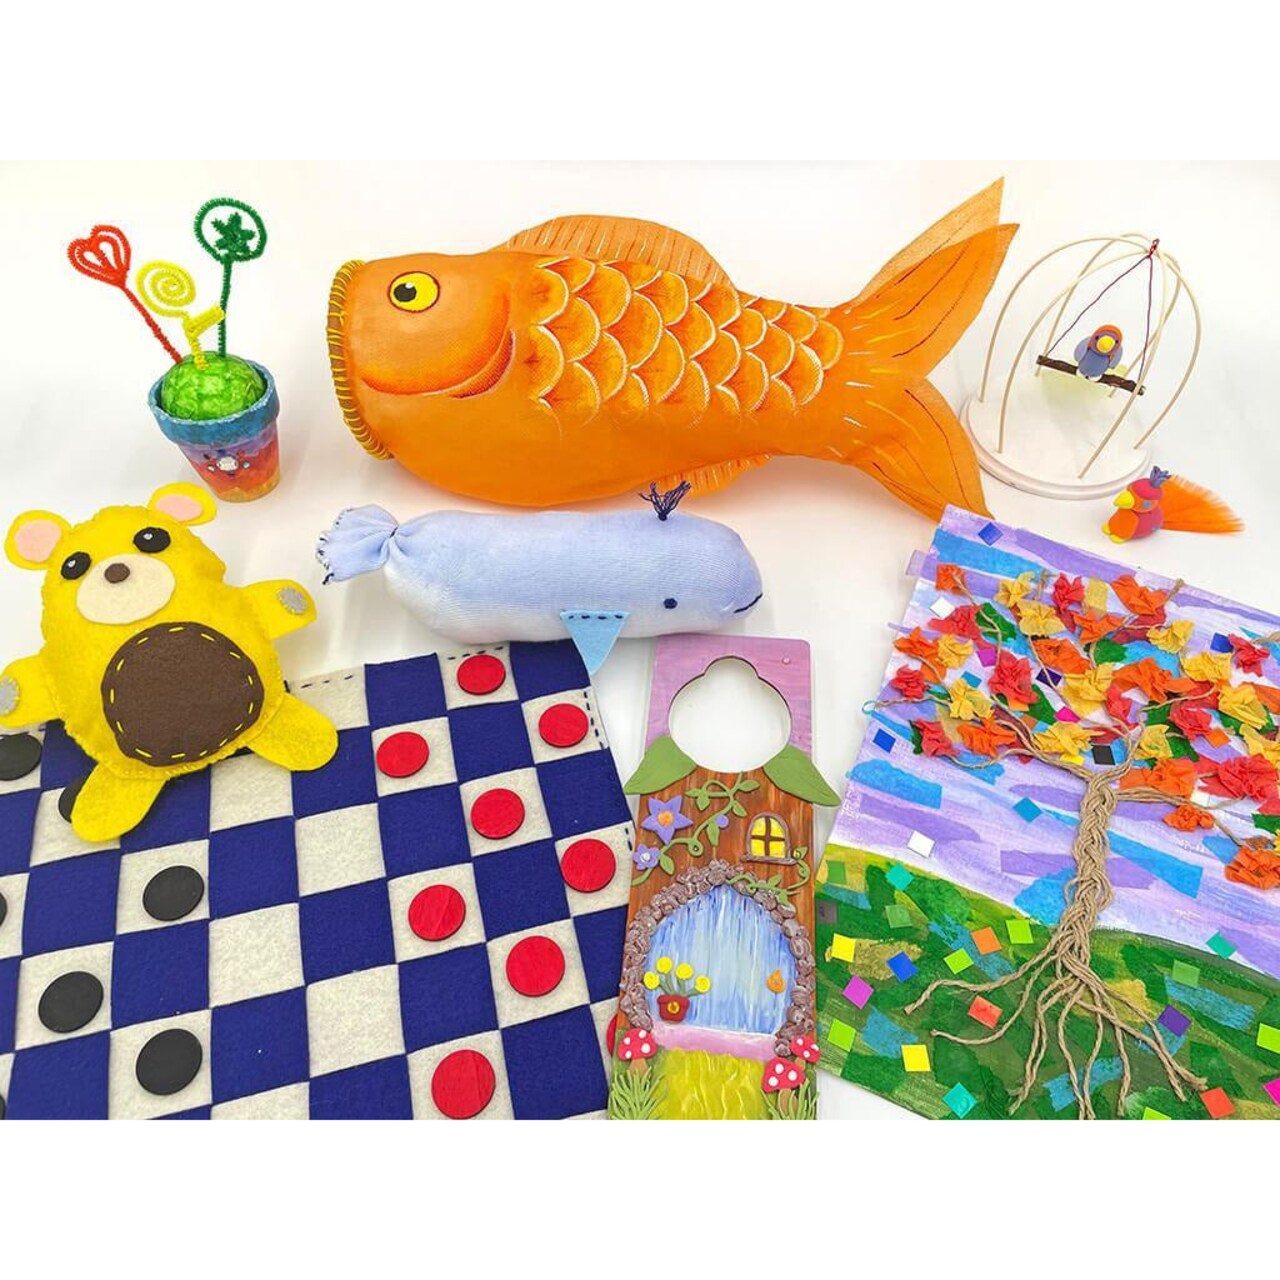 Kids Arts And Crafts Bundle Box